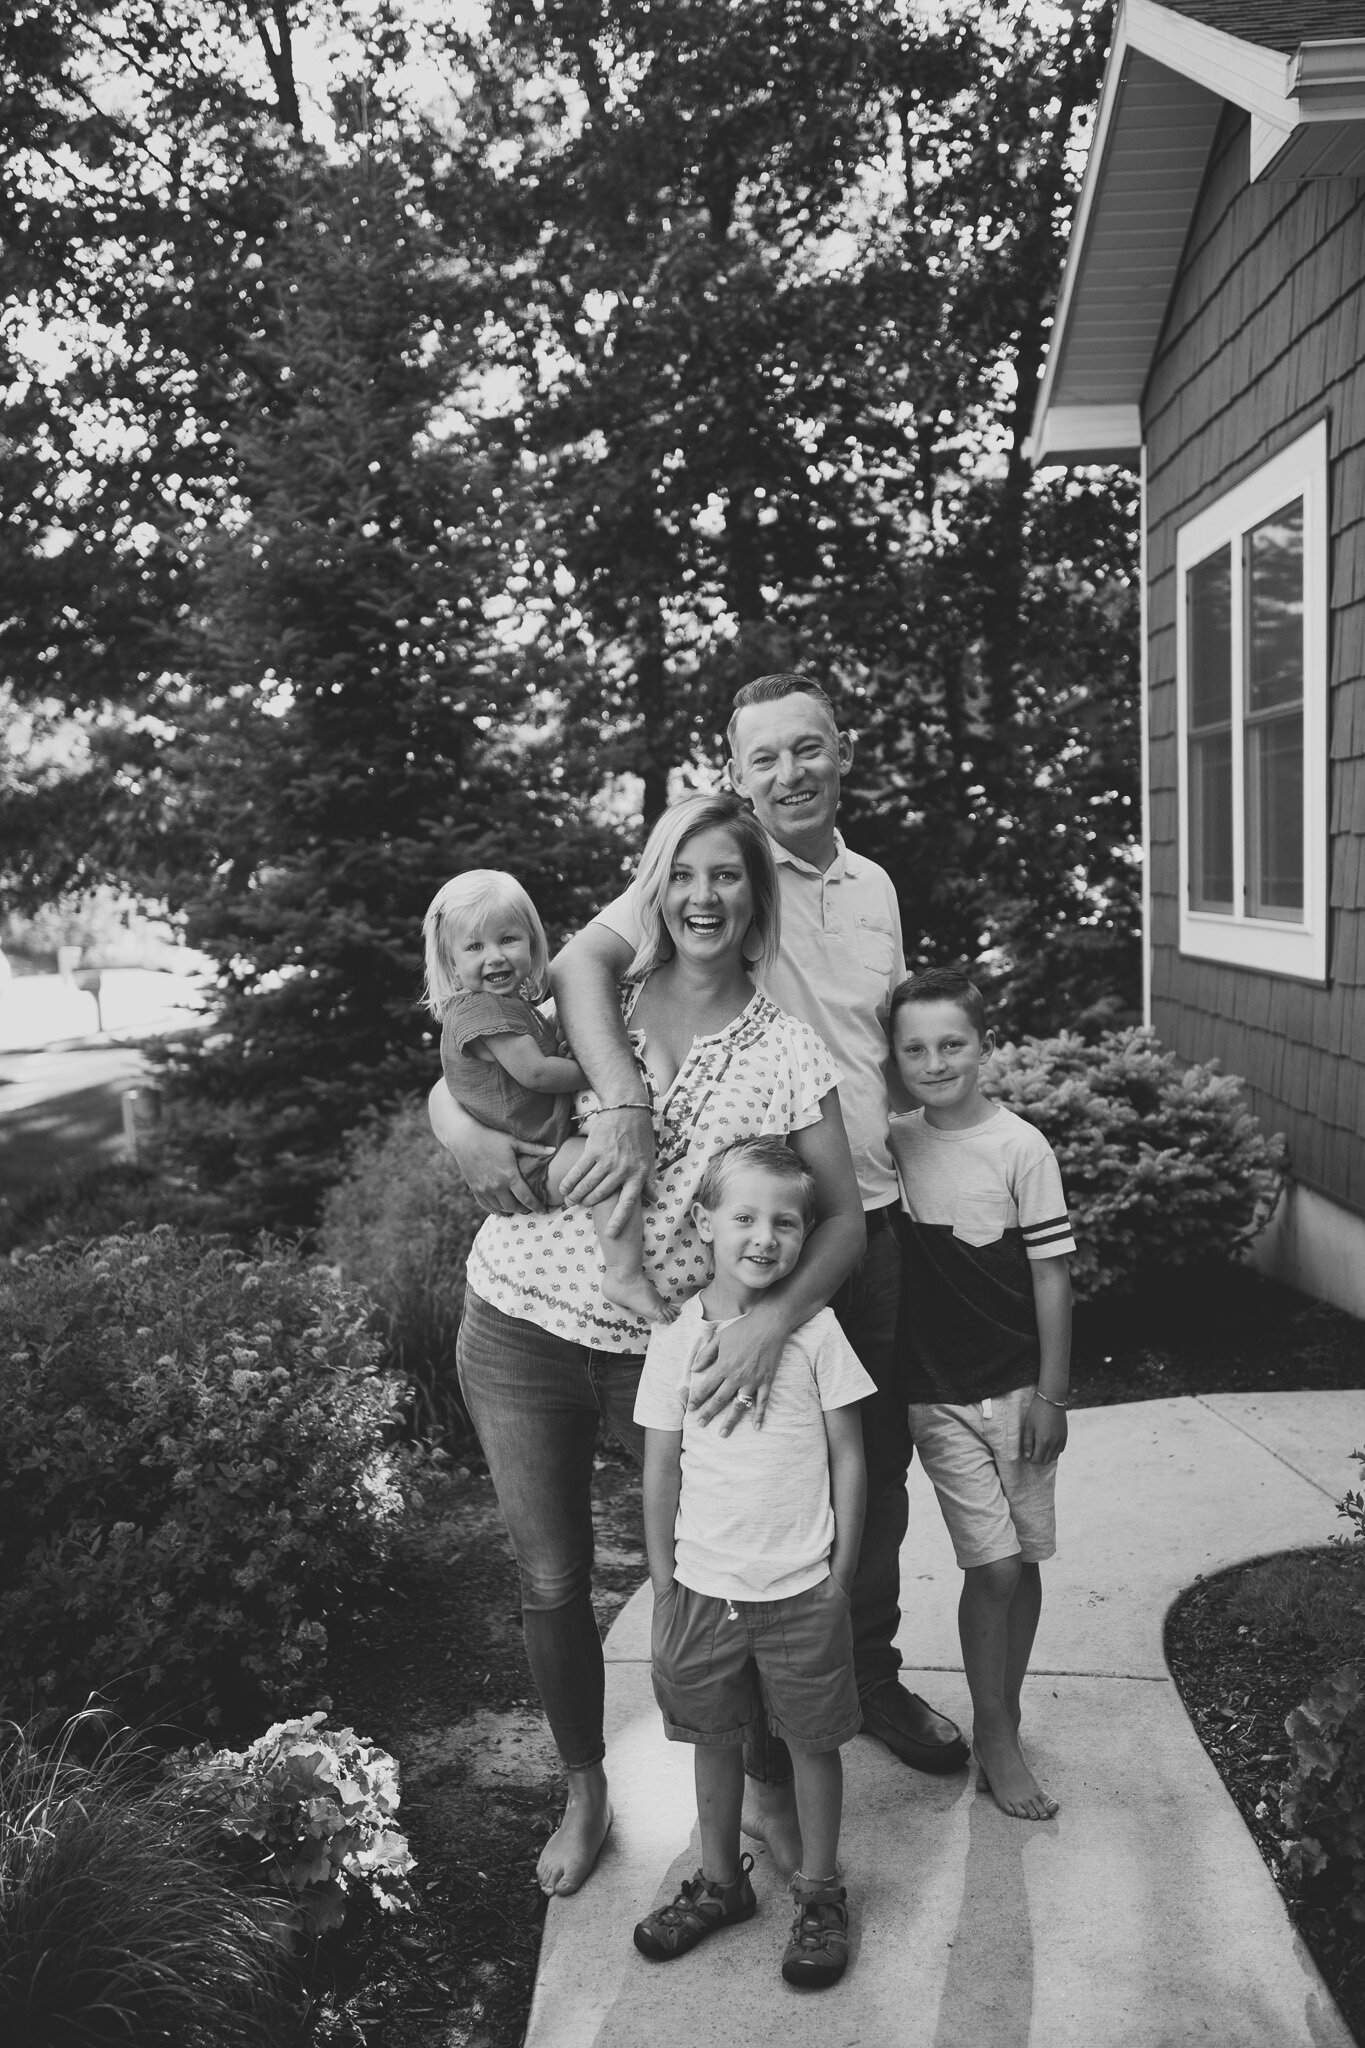 Clabuesch Family - Grand Rapids Family Photographer - Grand Rapids Lifestyle Photographer - Jessica Darling - J Darling Photo006.jpg